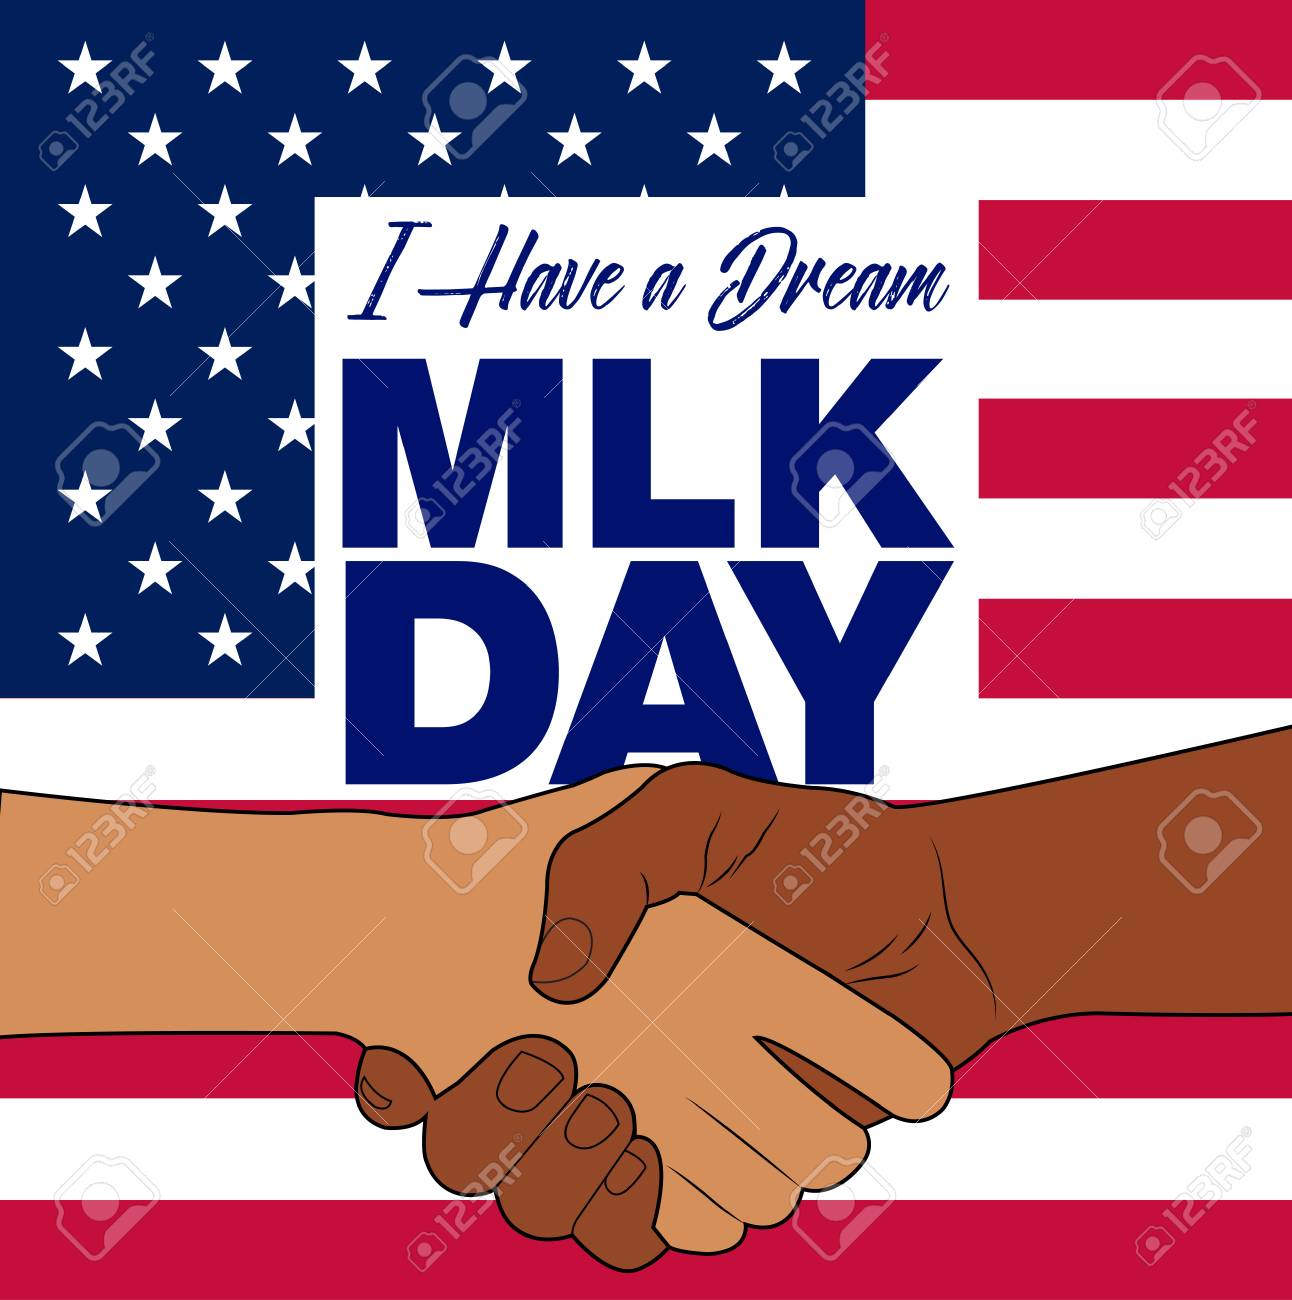 Martin Luther King Jr Day Background Illustration Of